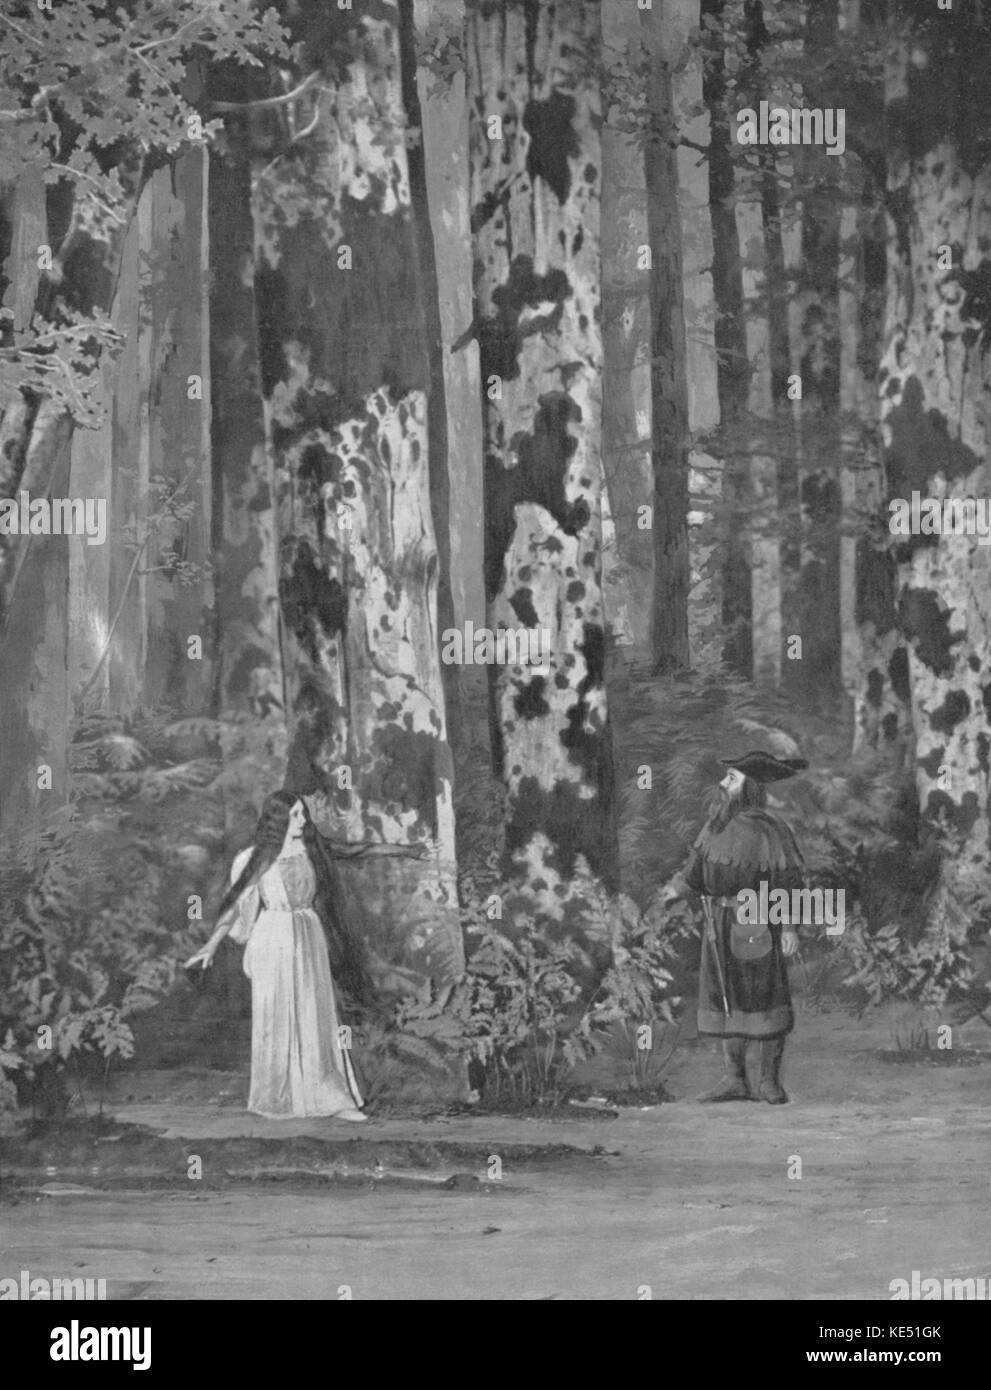 Claude Debussy 's opera Pelléas et Mélisande - 1Tableau - Golaud ( Hector Dufrane - Belga baritono) incontra Mélisande, (Giardino di Maria - Scottish soprano) all'Opéra-Comique di Parigi. Debussy, compositore francese, 22 agosto 1862 - 25 Marzo 1918. Foto Stock